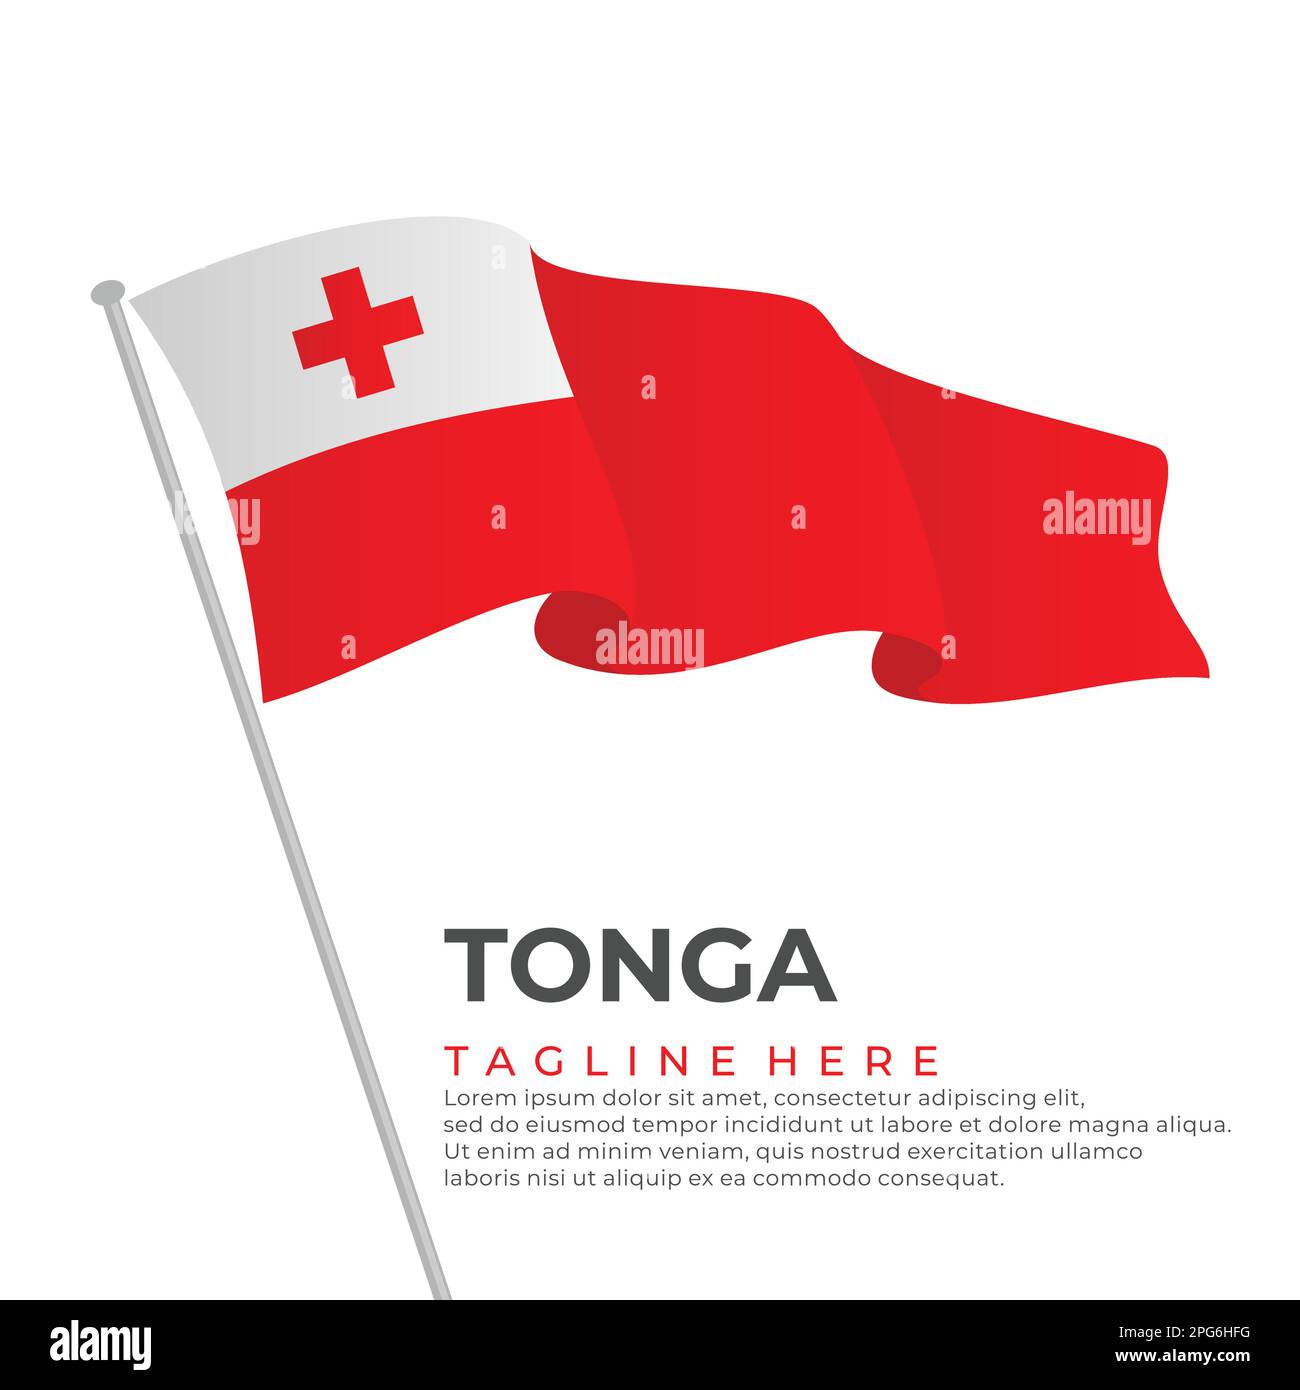 Modernes Design mit Schablonenvektor und Tonga-Flagge. Vektordarstellung Stock Vektor